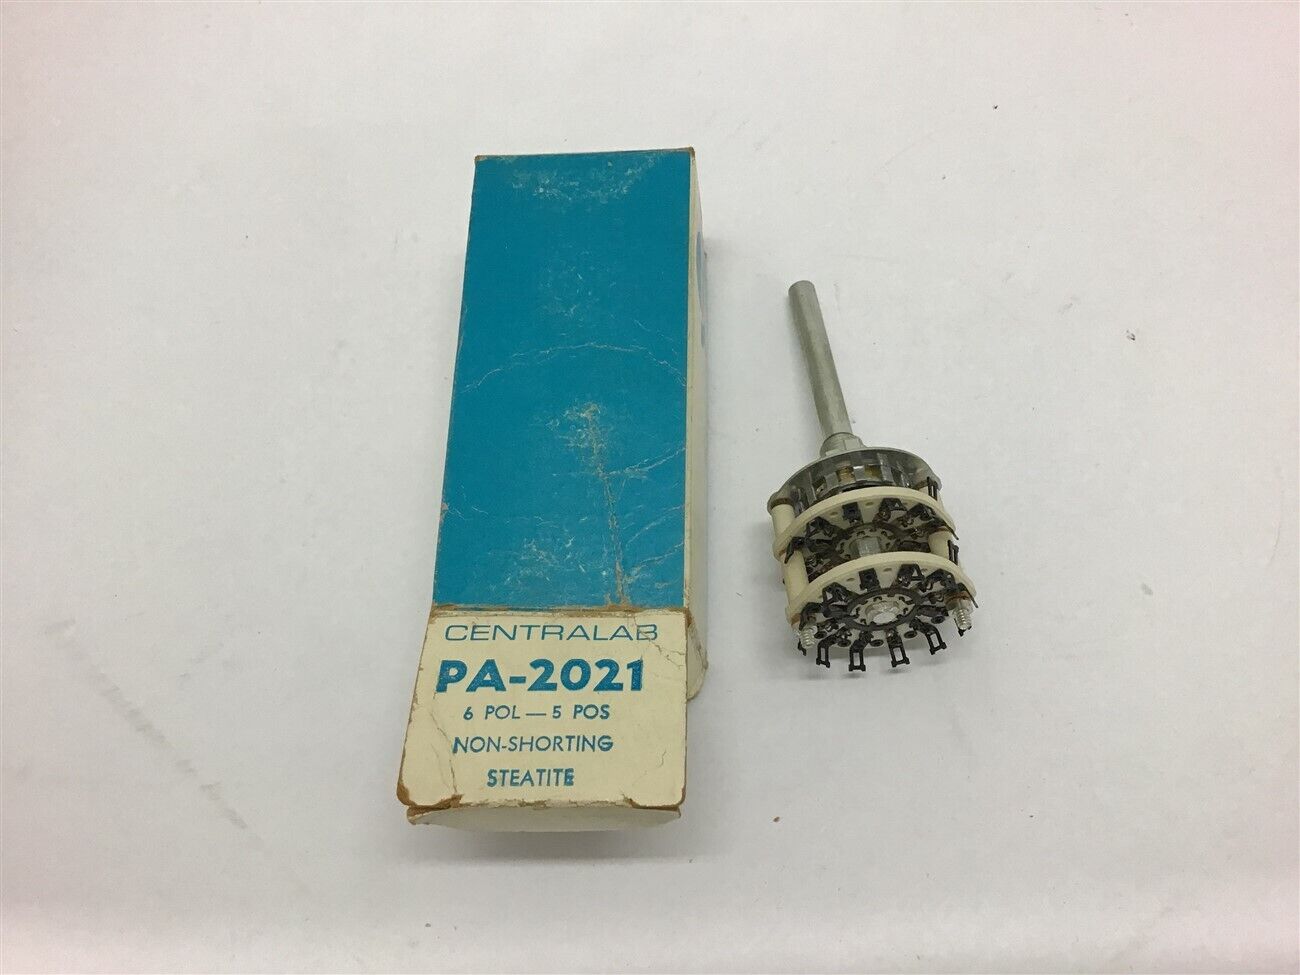 Centralab PA-2021 Potentiometer 6 Pol- 5 Pos Non-Shorting Steatite 